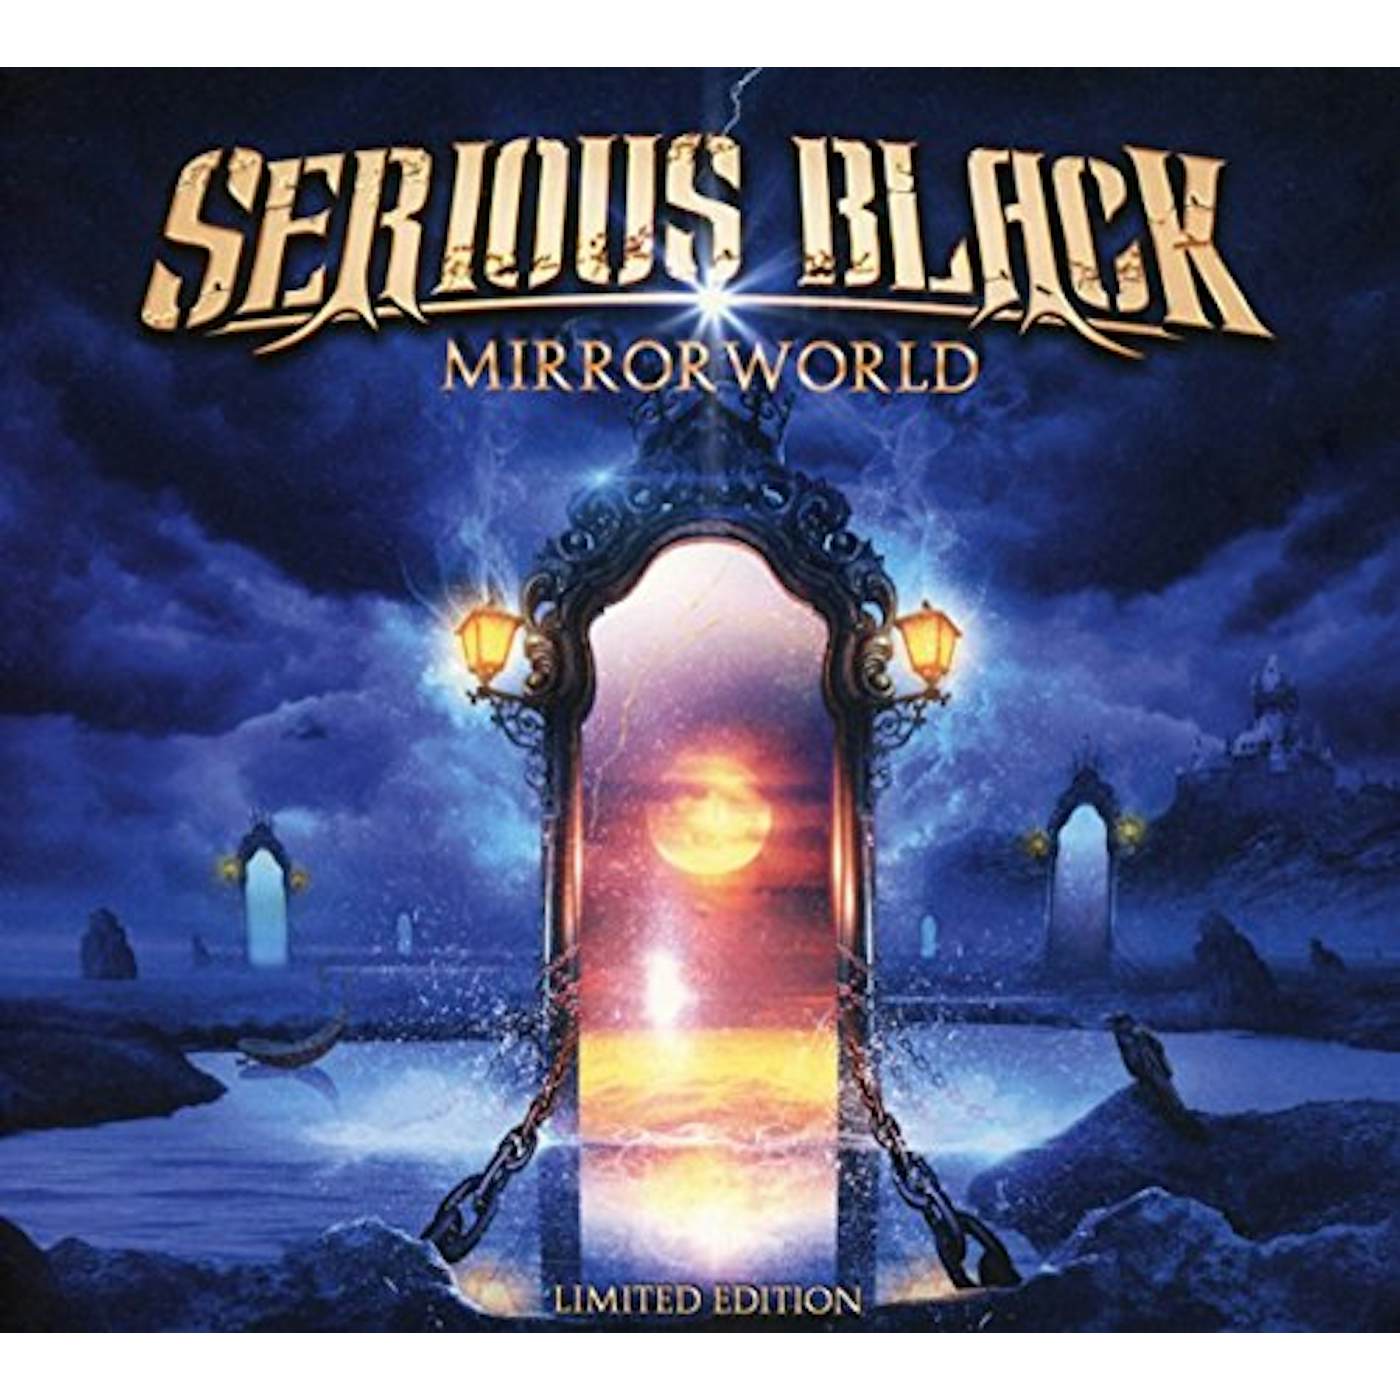 Serious Black MIRRORWORLD CD